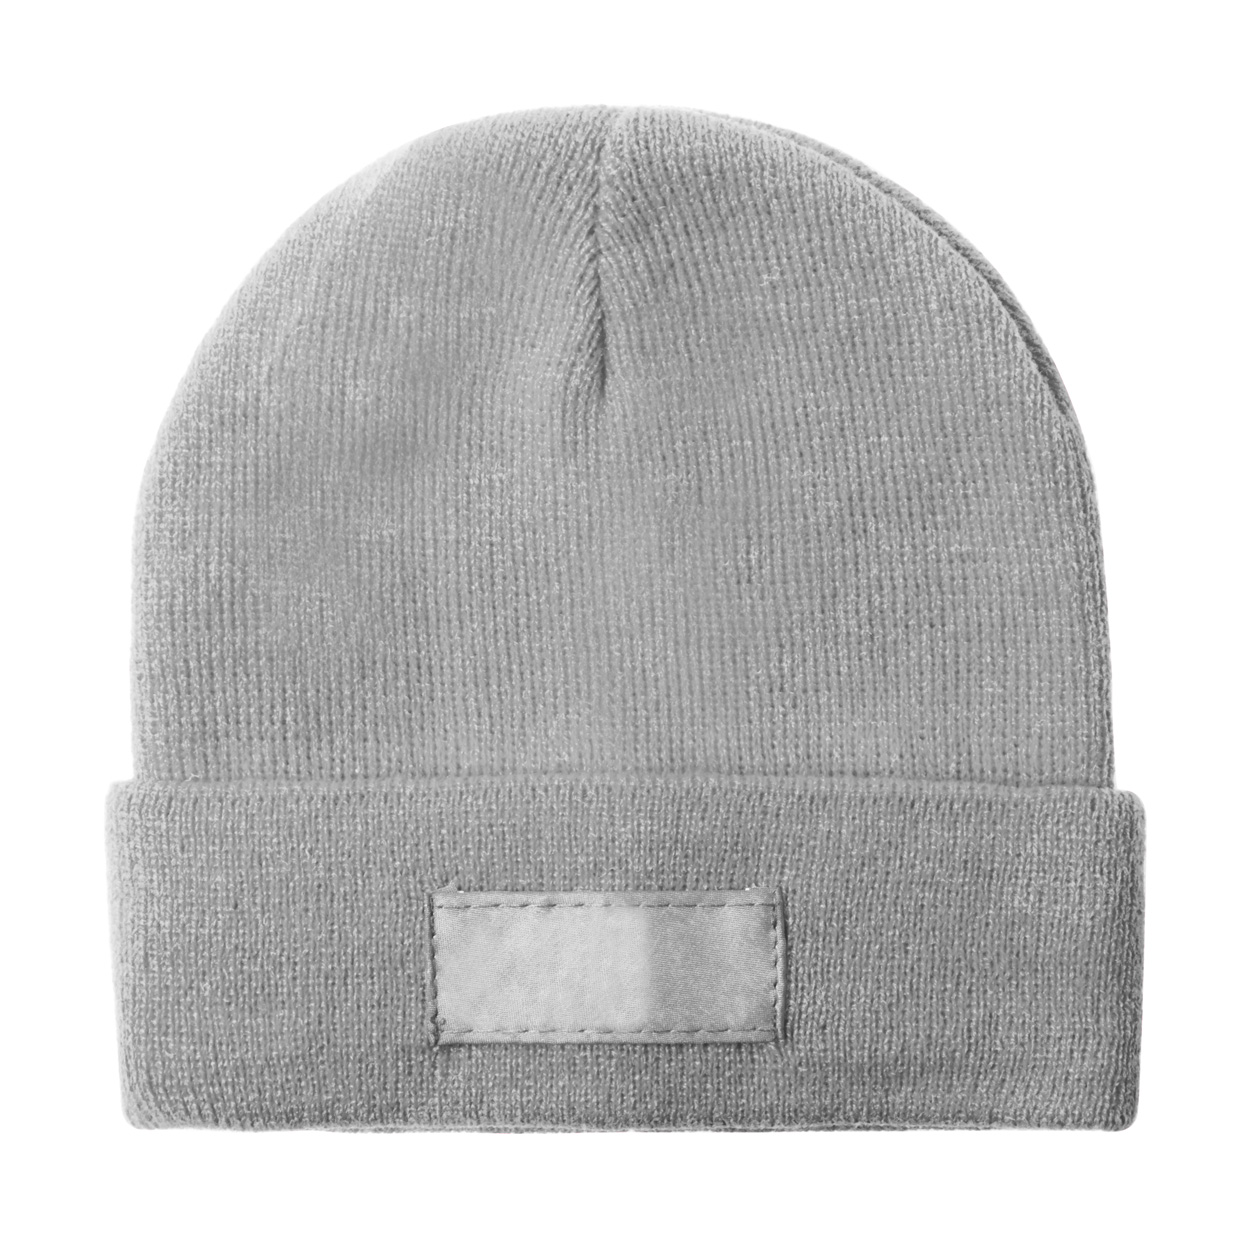 Holsen winter hat - grey